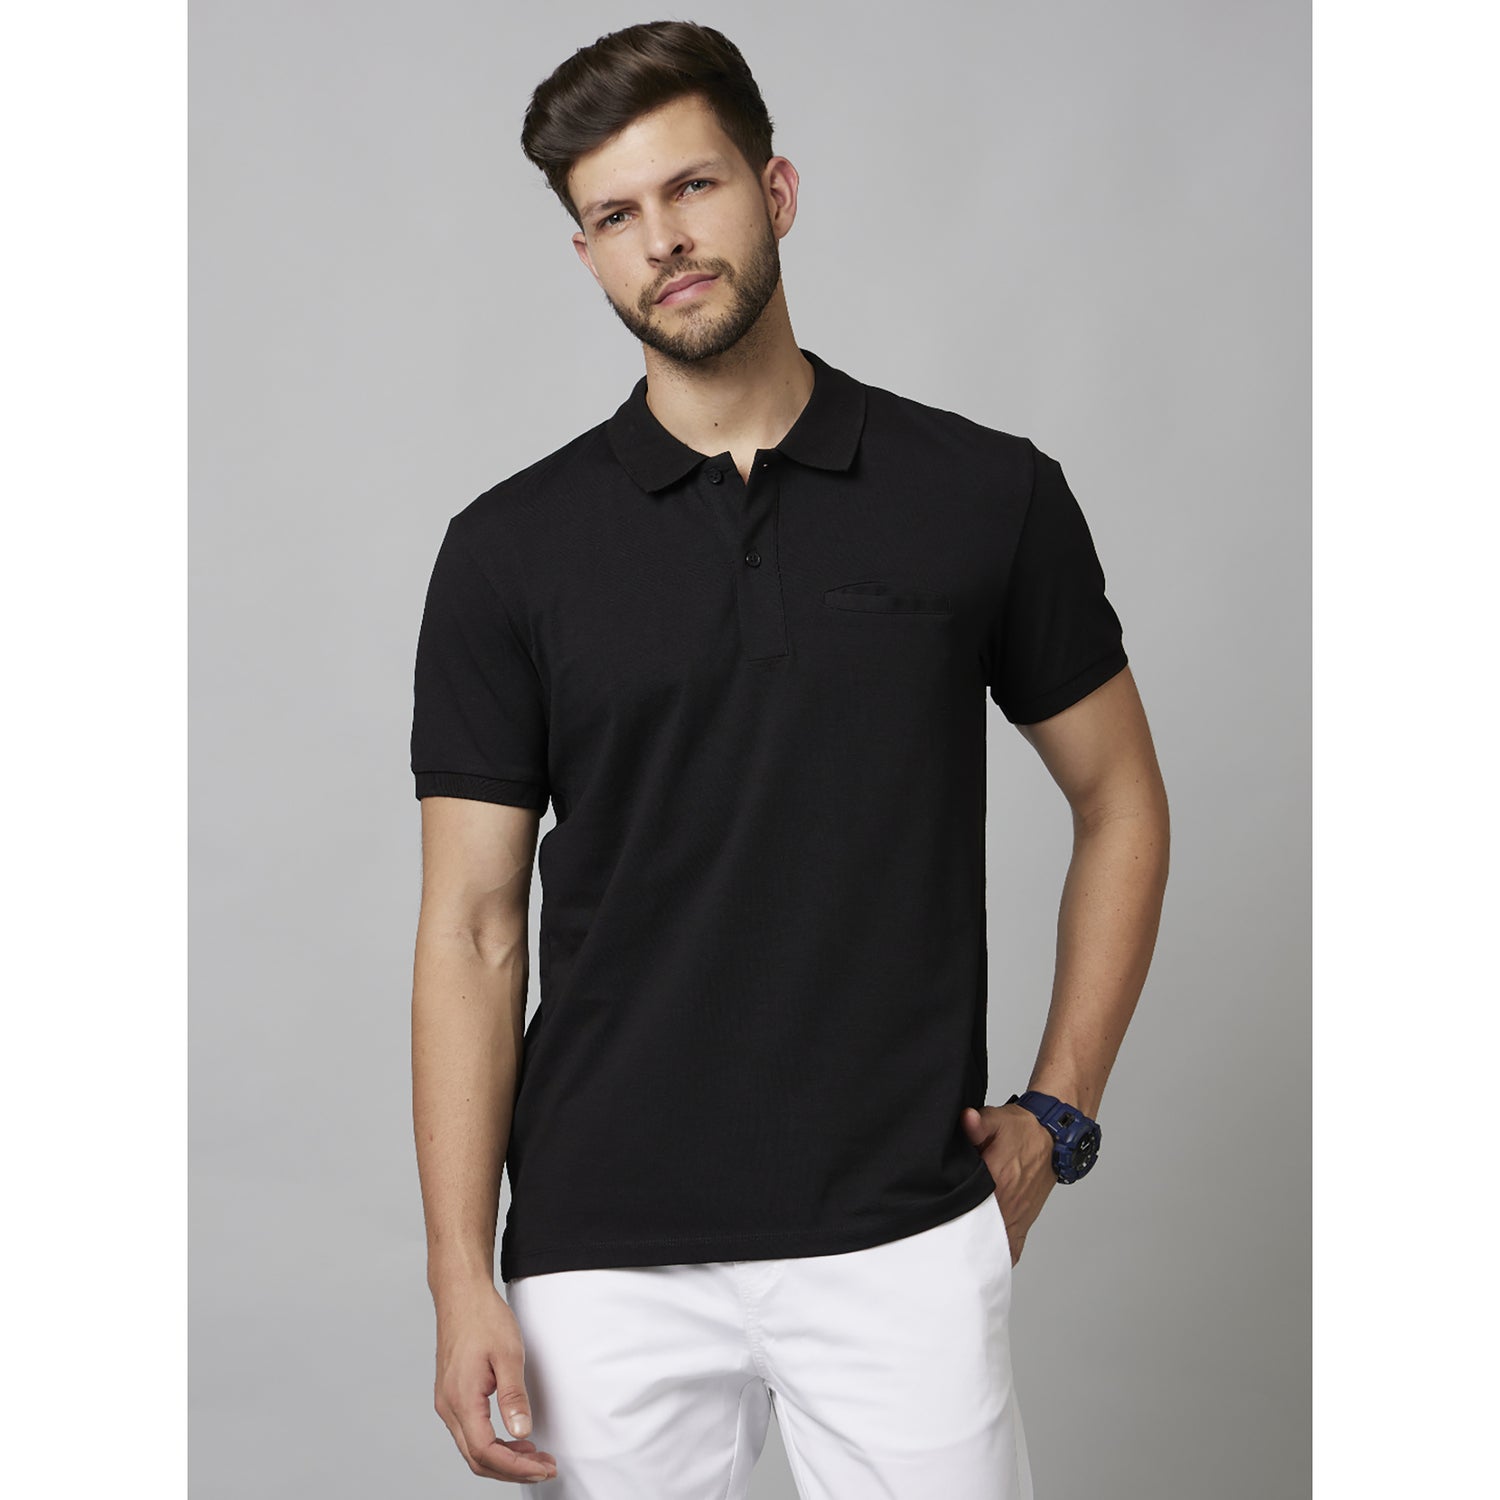 Black Solid Short Sleeve Cotton Poly Blend T-Shirts (DECOULE)